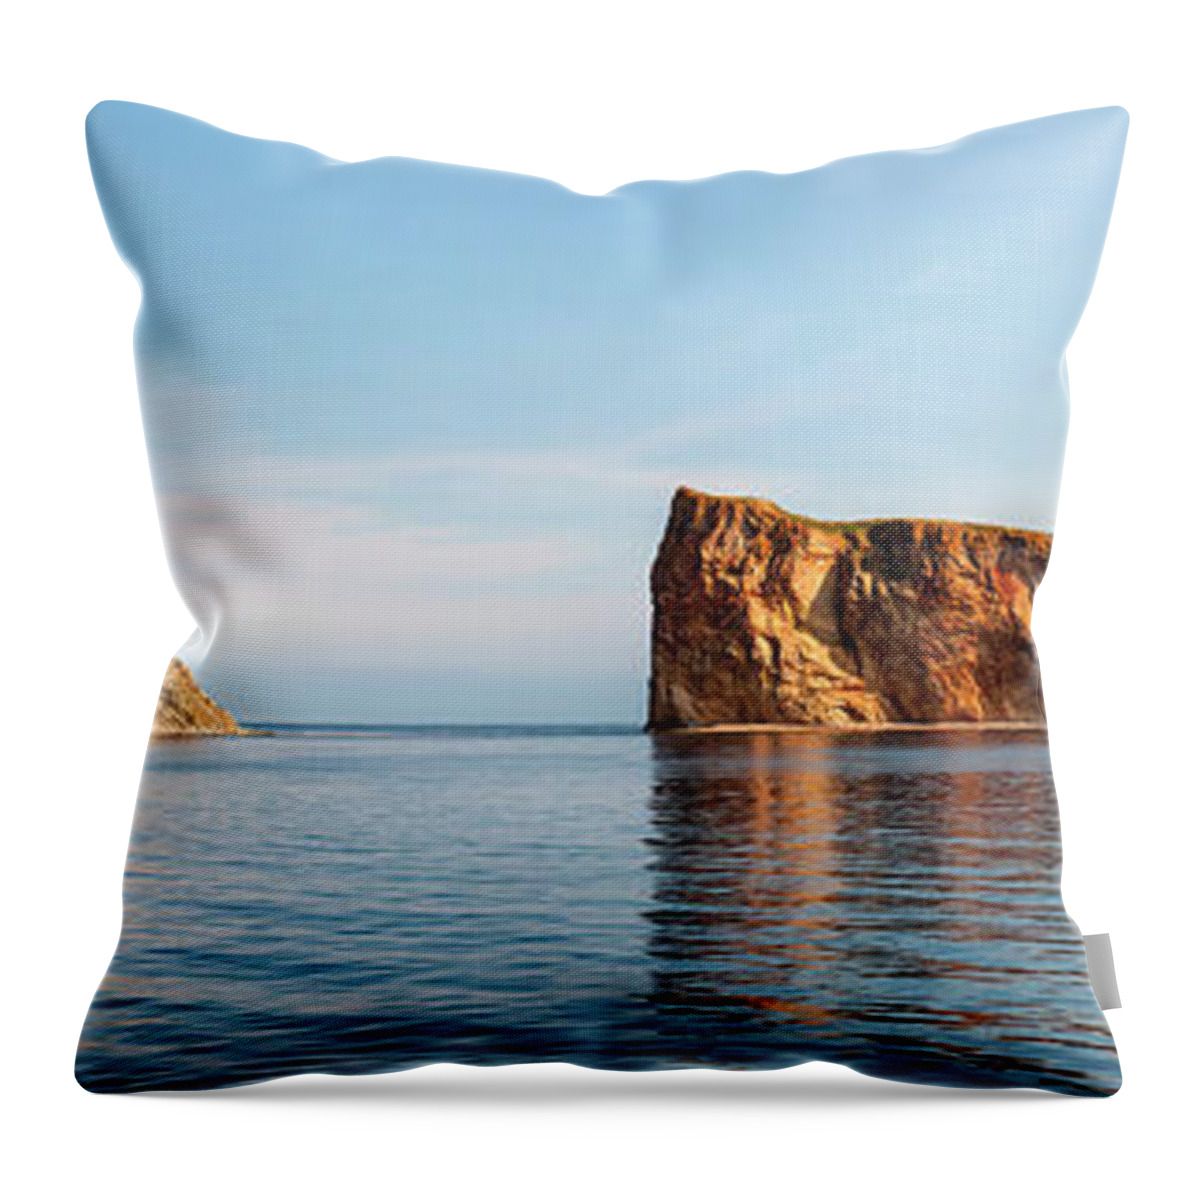 Perce Rock Throw Pillow featuring the photograph Perce Rock at Gaspe Peninsula by Elena Elisseeva